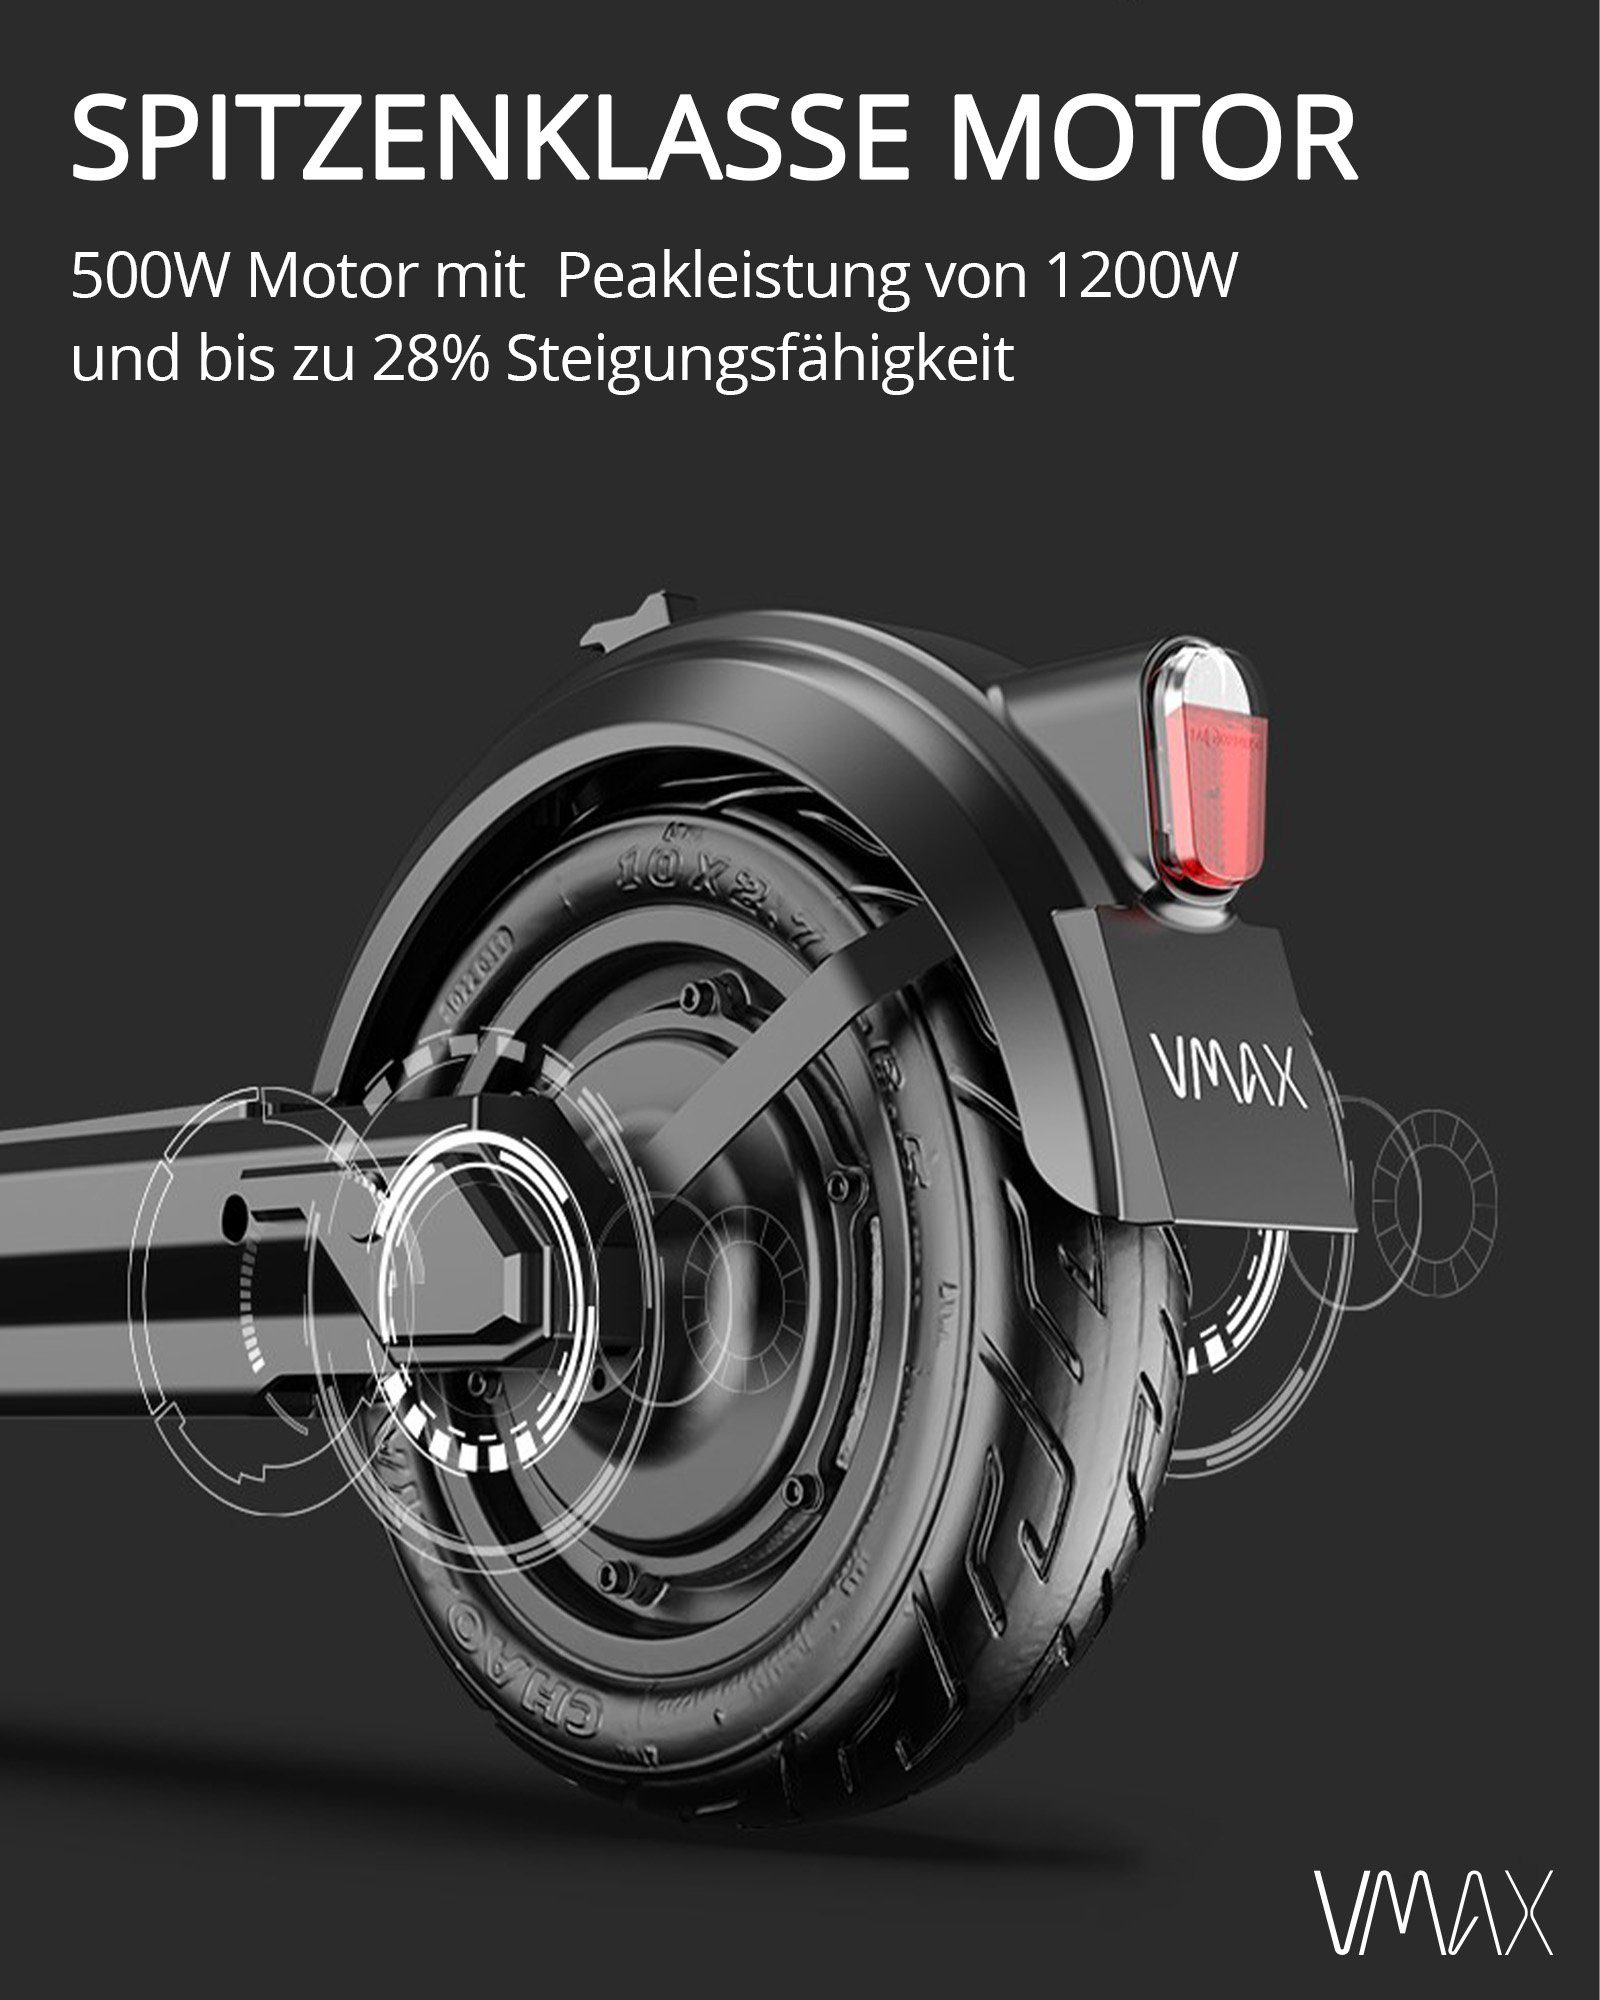 mit E-Scooter W, VMAX 20,00 klappbar PRO 500,00 GT-B, km/h, VX2 Straßenzulassung,